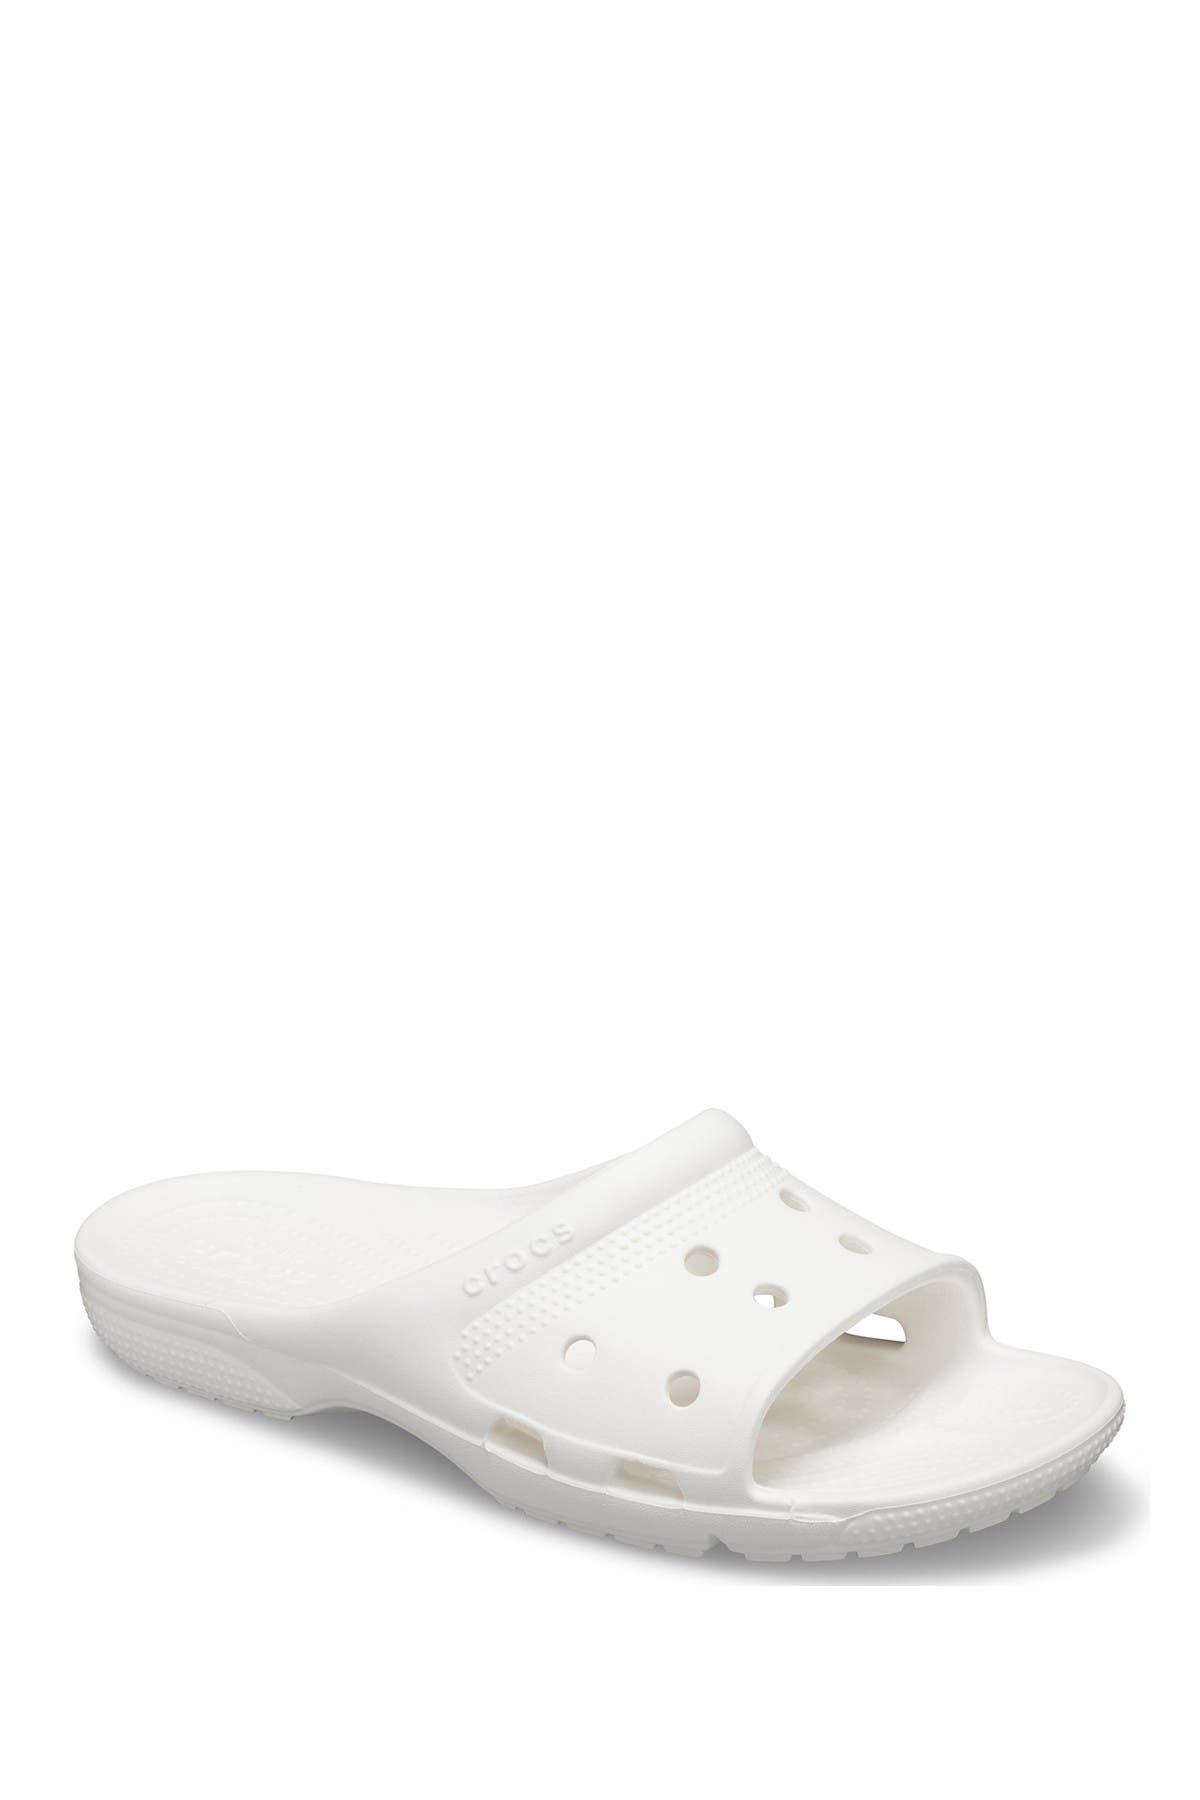 Crocs Classic Slide Sandals From Finish Line In White/white | ModeSens